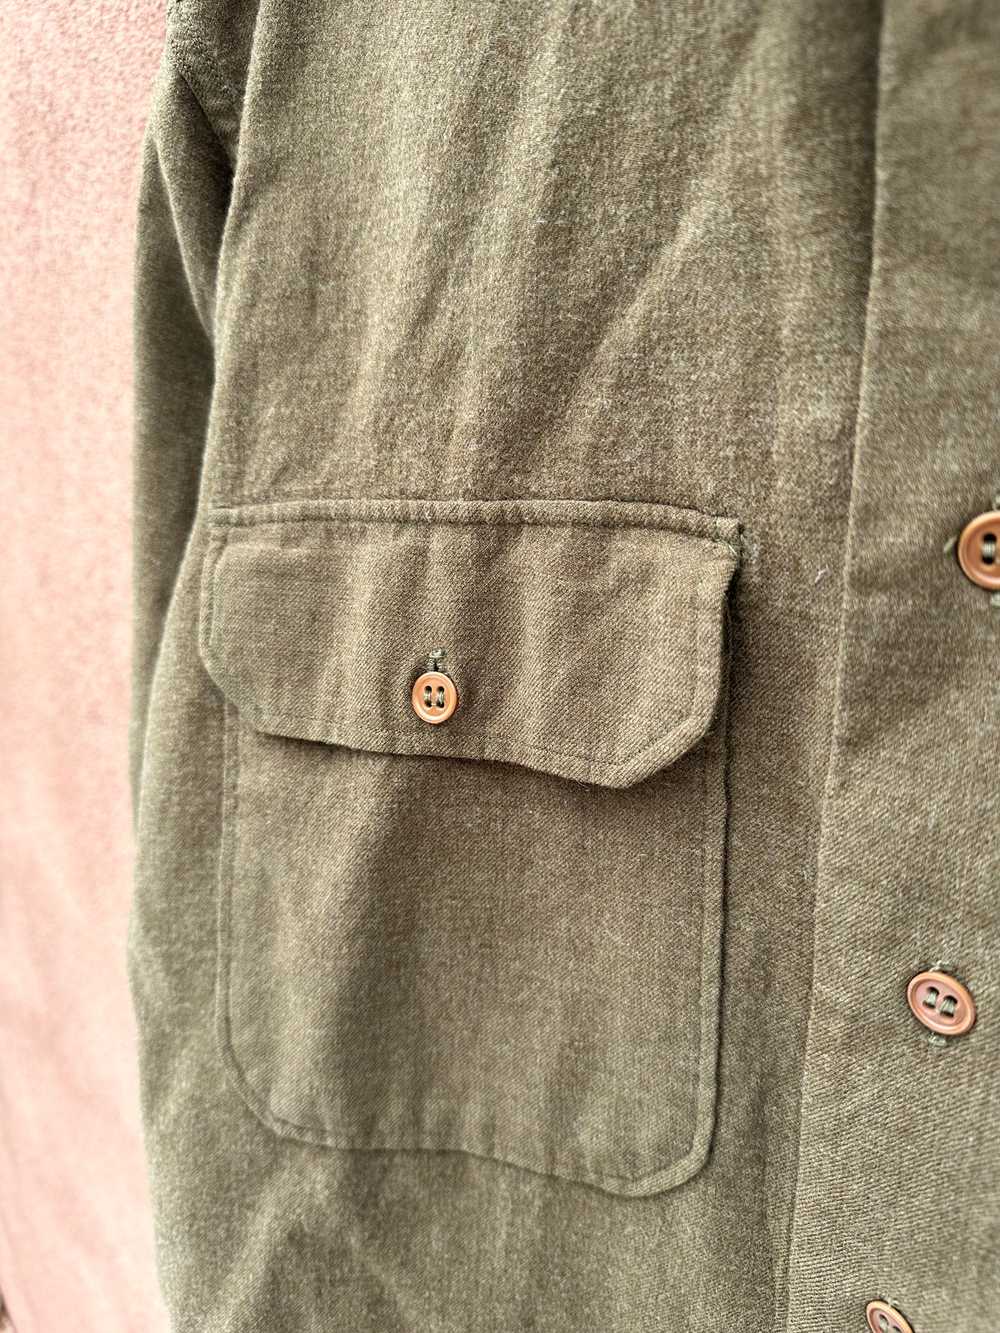 Drab Green WWII Wool U.S. Army Shirt - image 2